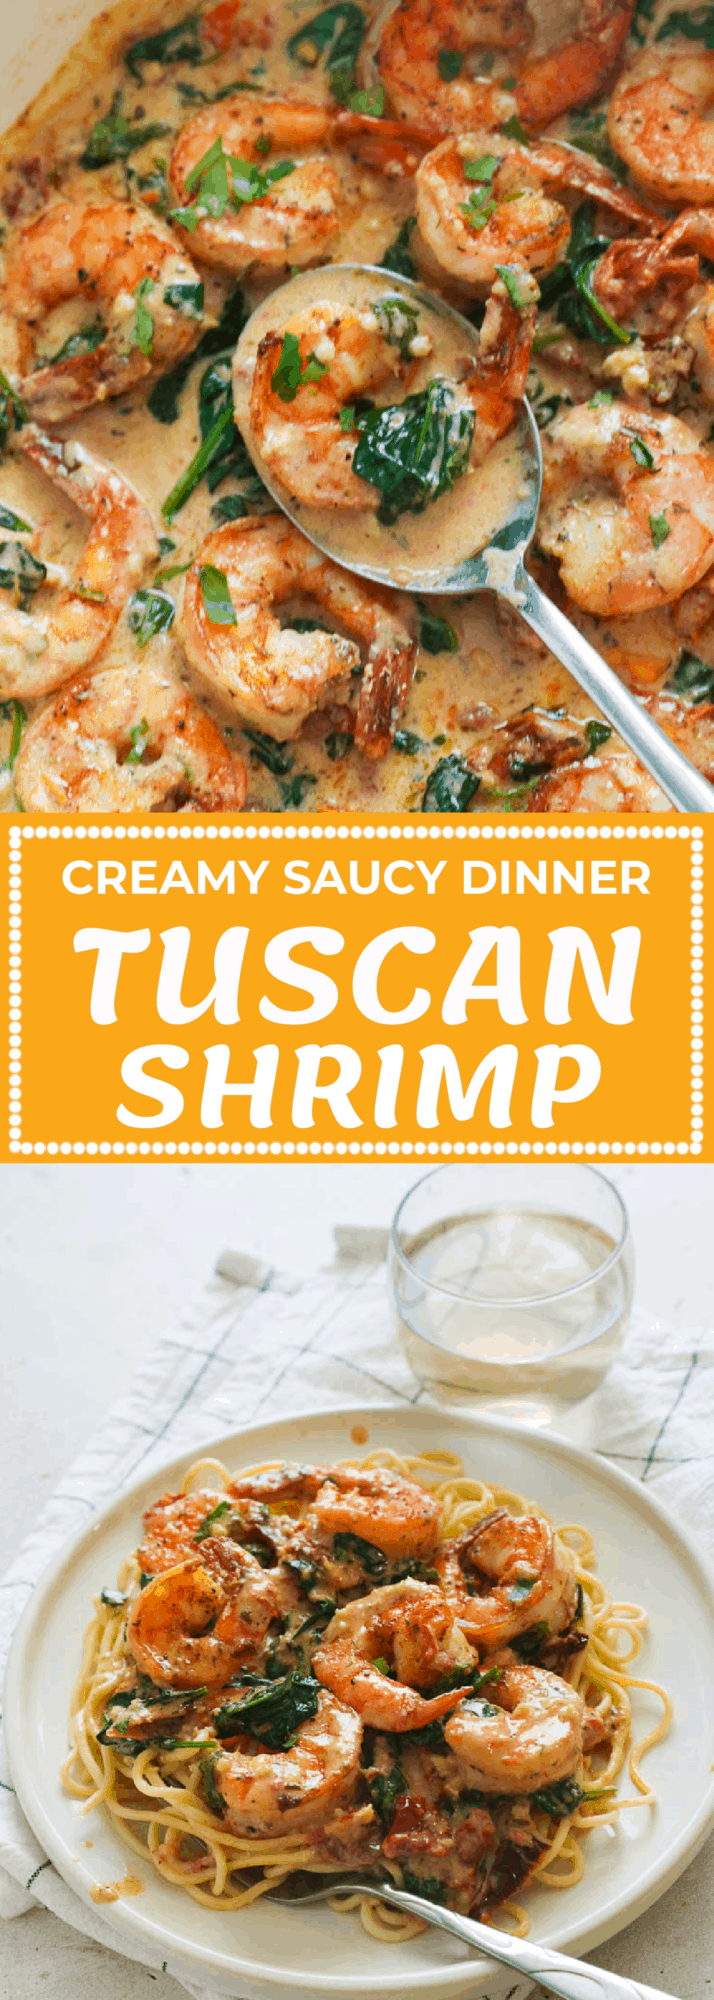 Creamy Tuscan Shrimp - Immaculate Bites Seafood Recipes